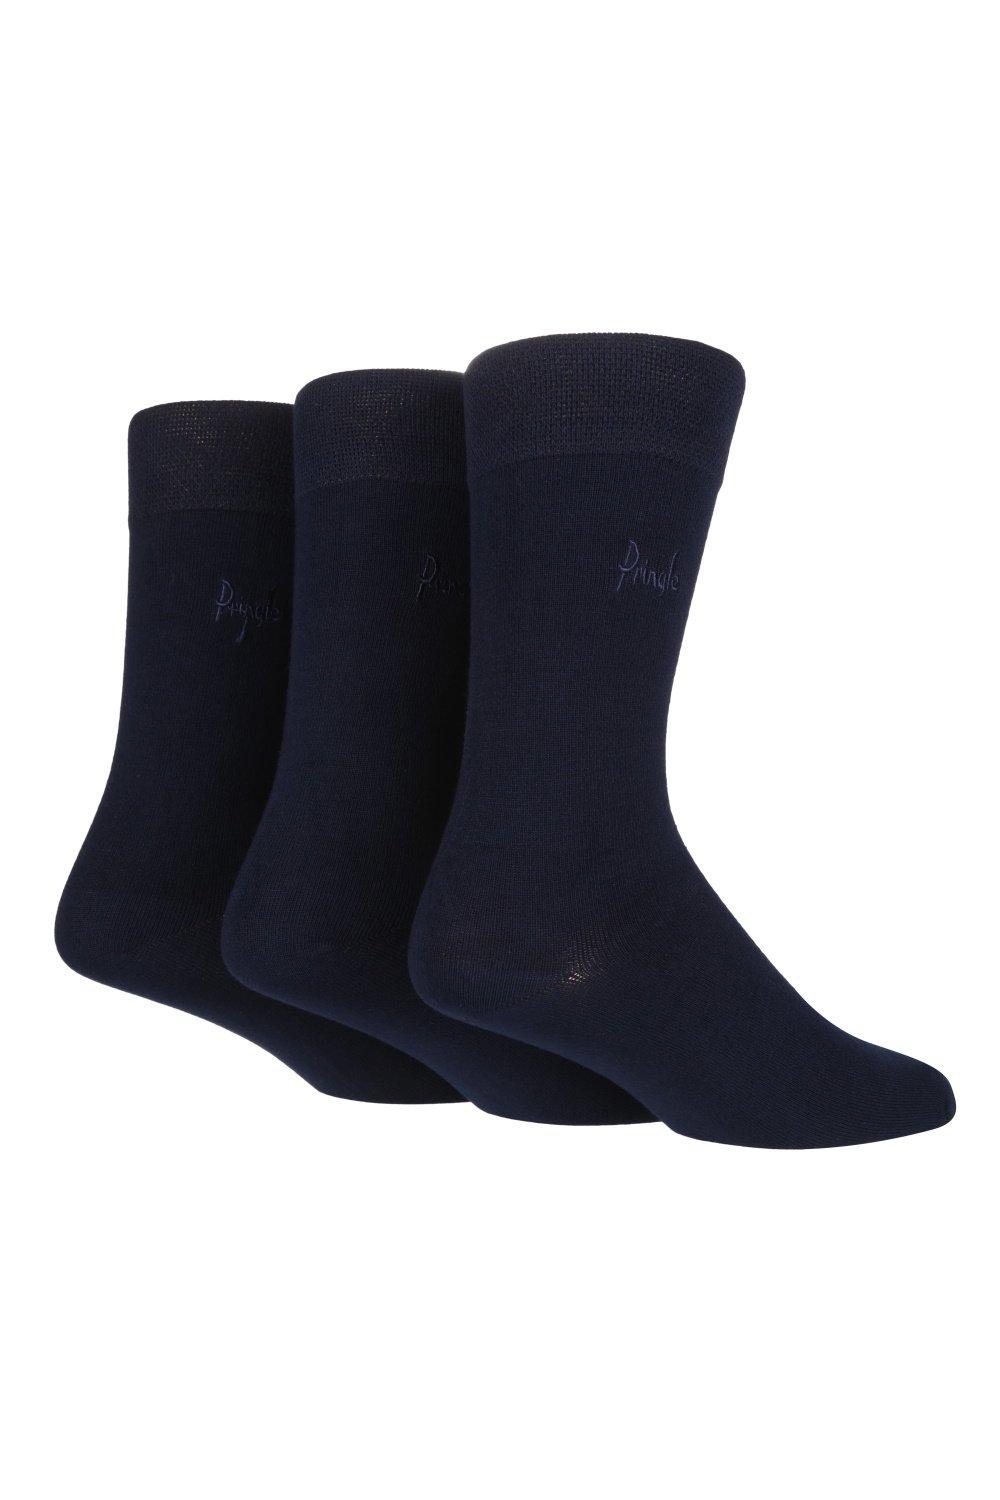 3 Pair Pack Bamboo Comfort Cuff Socks